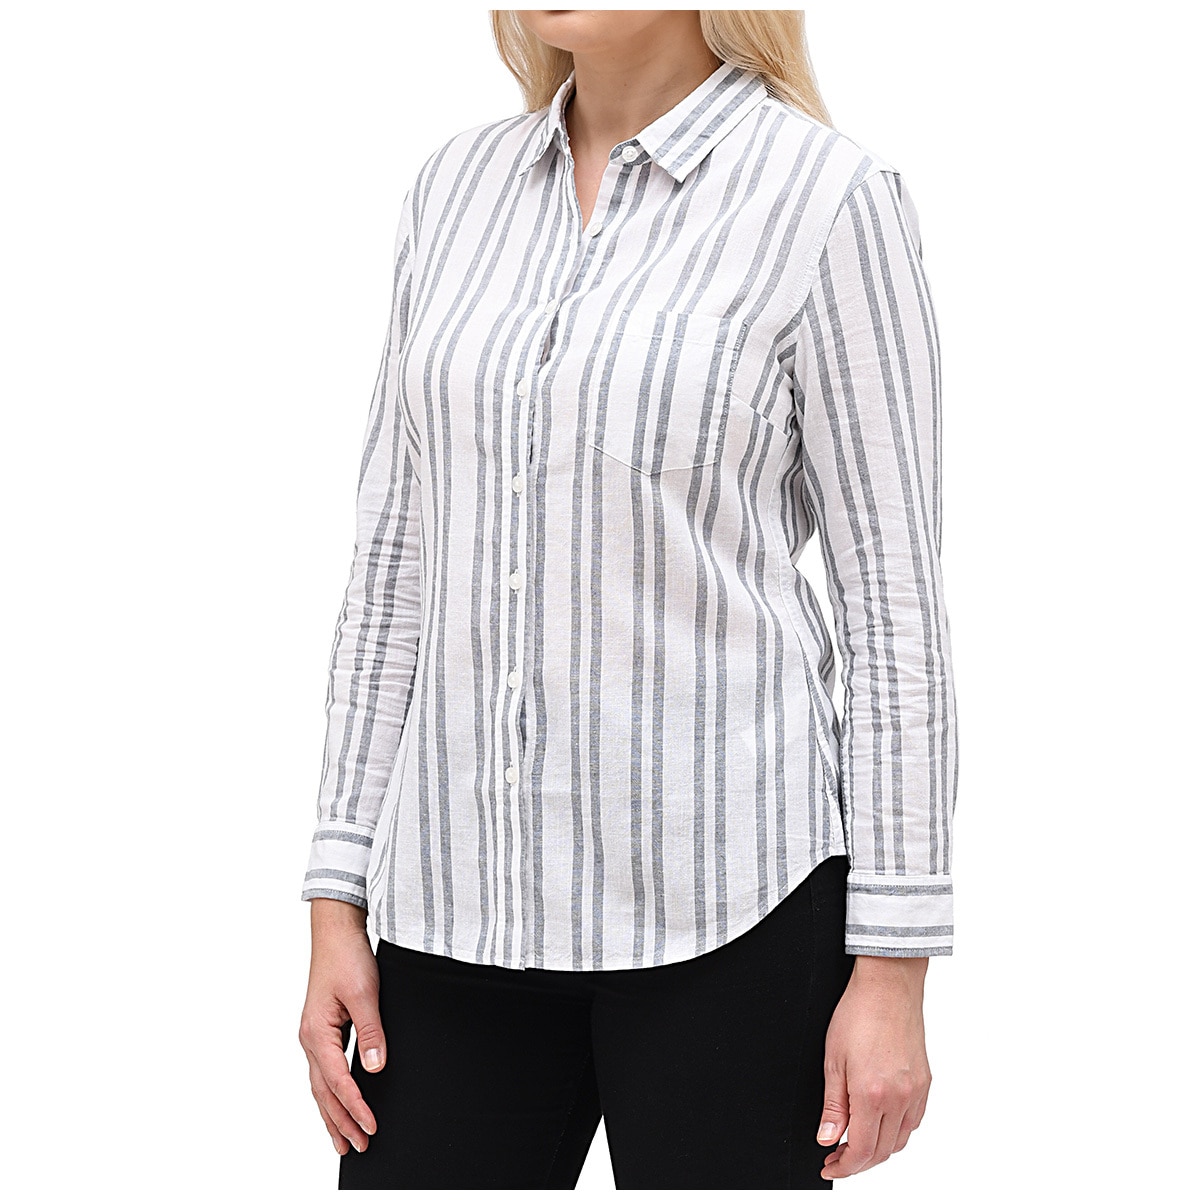 Jachs Women's Linen Shirt - White/Grey